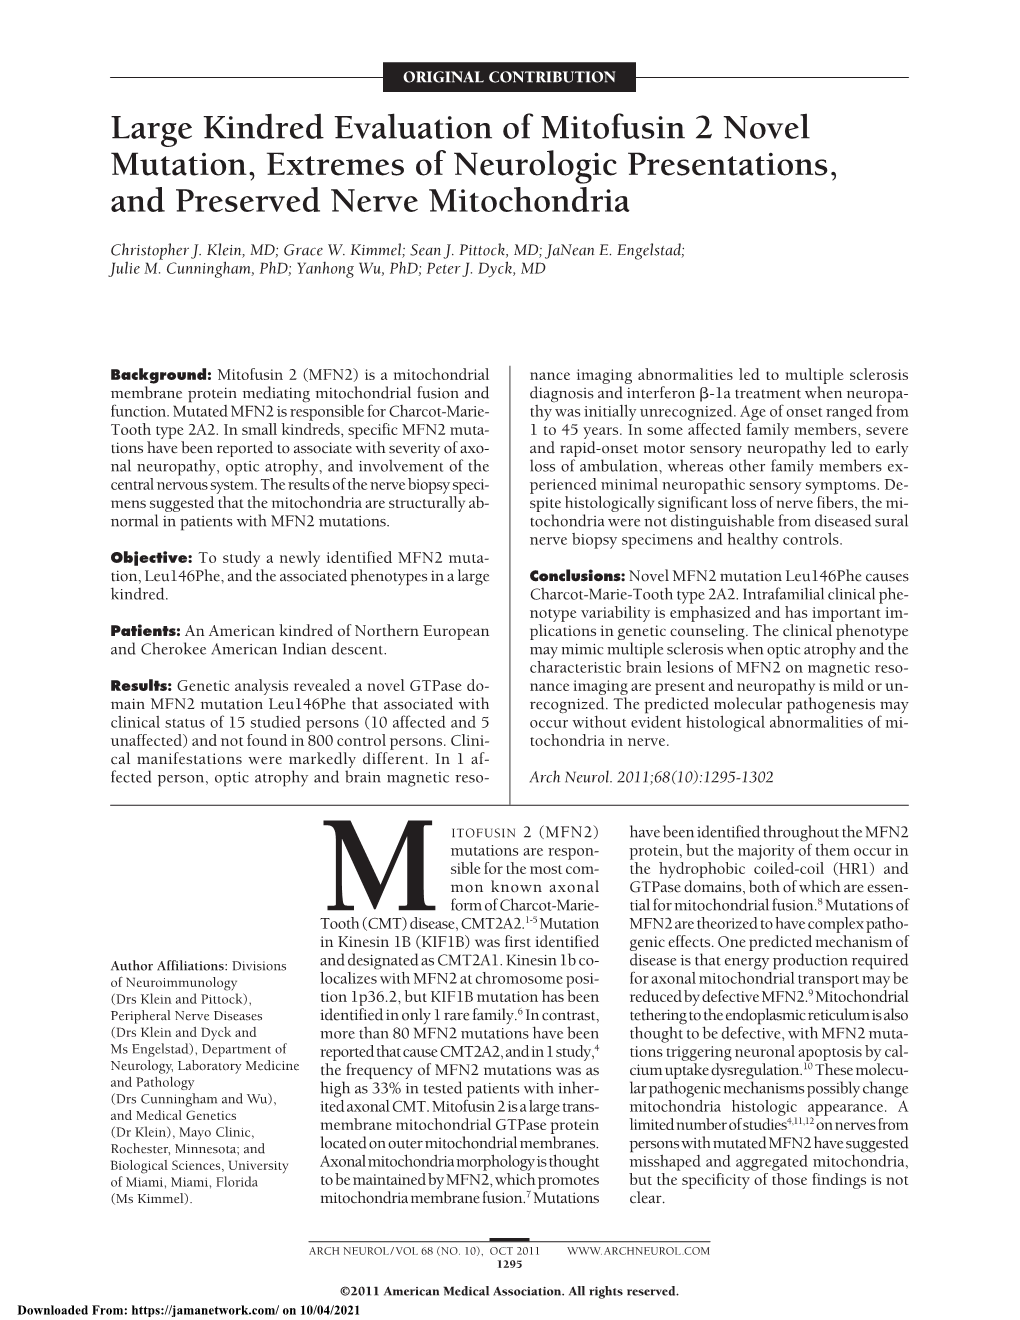 Large Kindred Evaluation of Mitofusin 2 Novel Mutation, Extremes of Neurologic Presentations, and Preserved Nerve Mitochondria